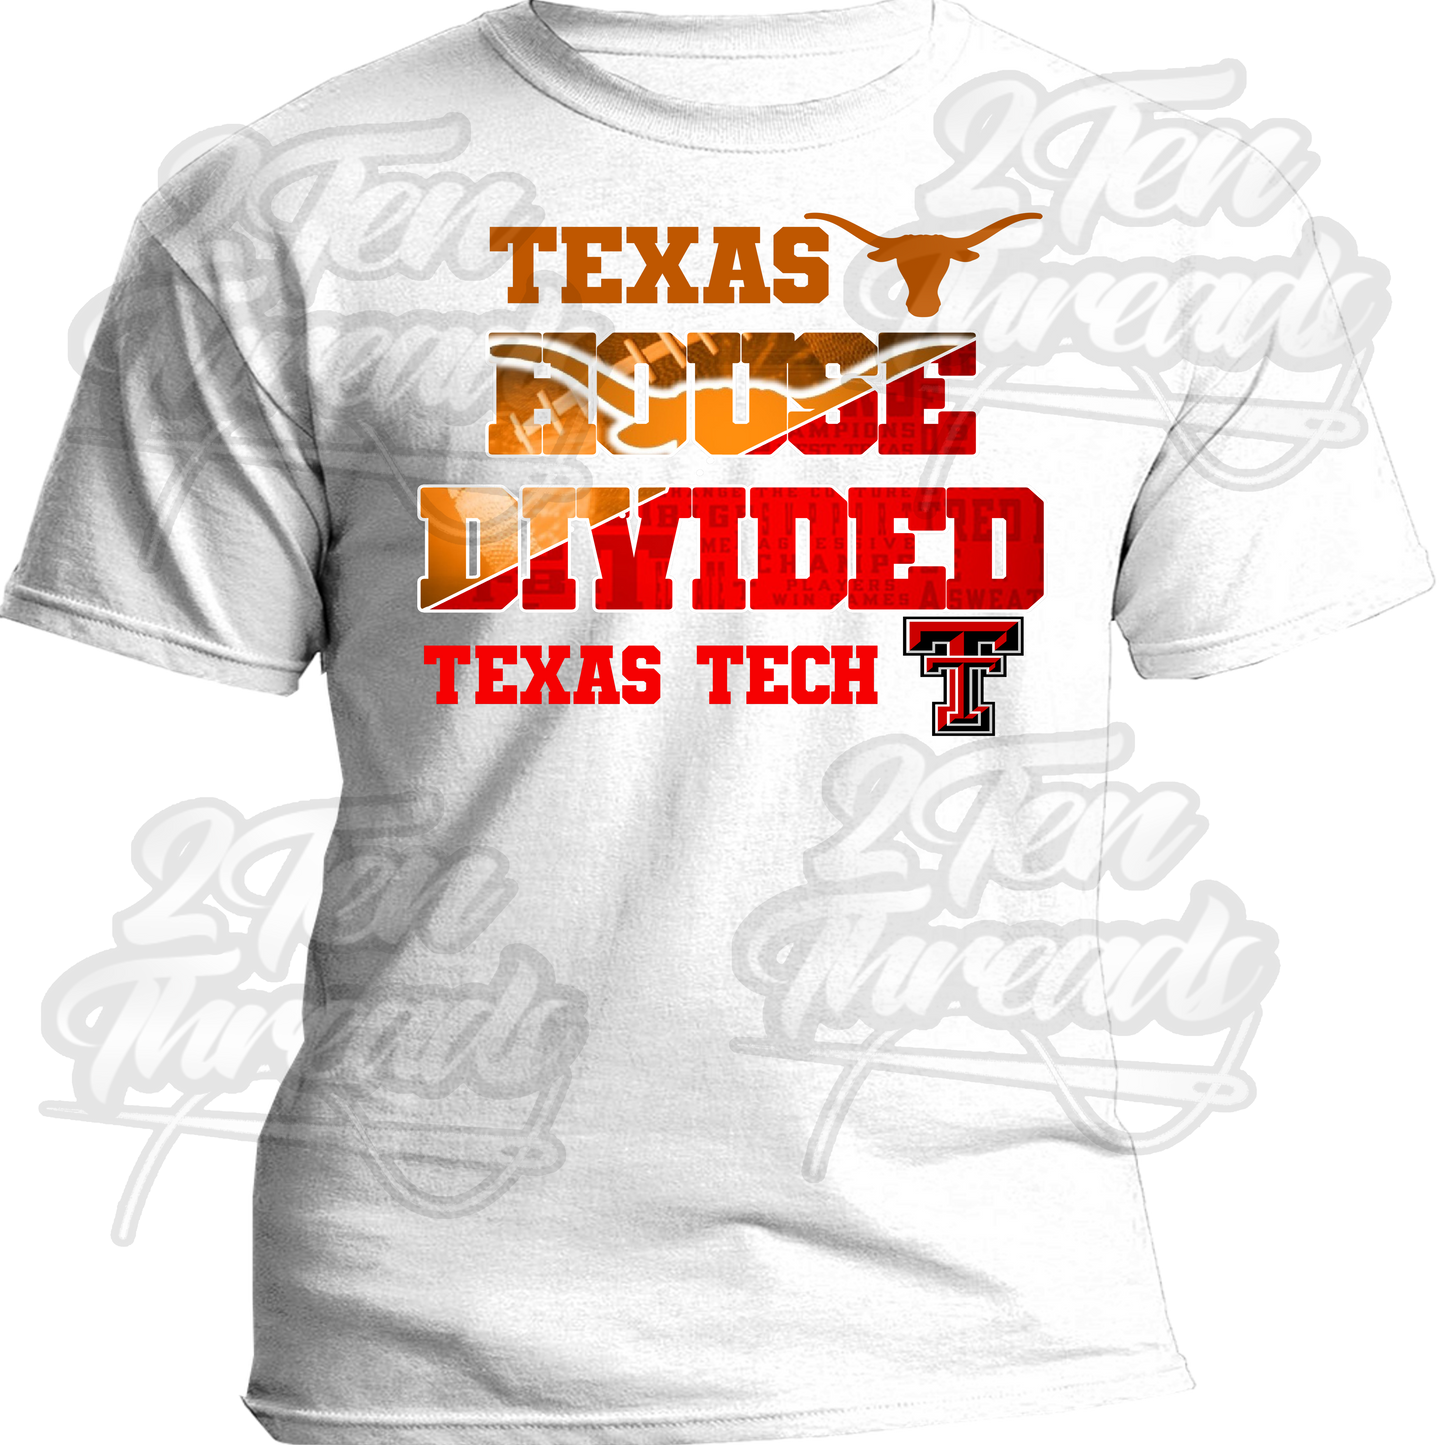 Texas / Texas Tech House divided shirt